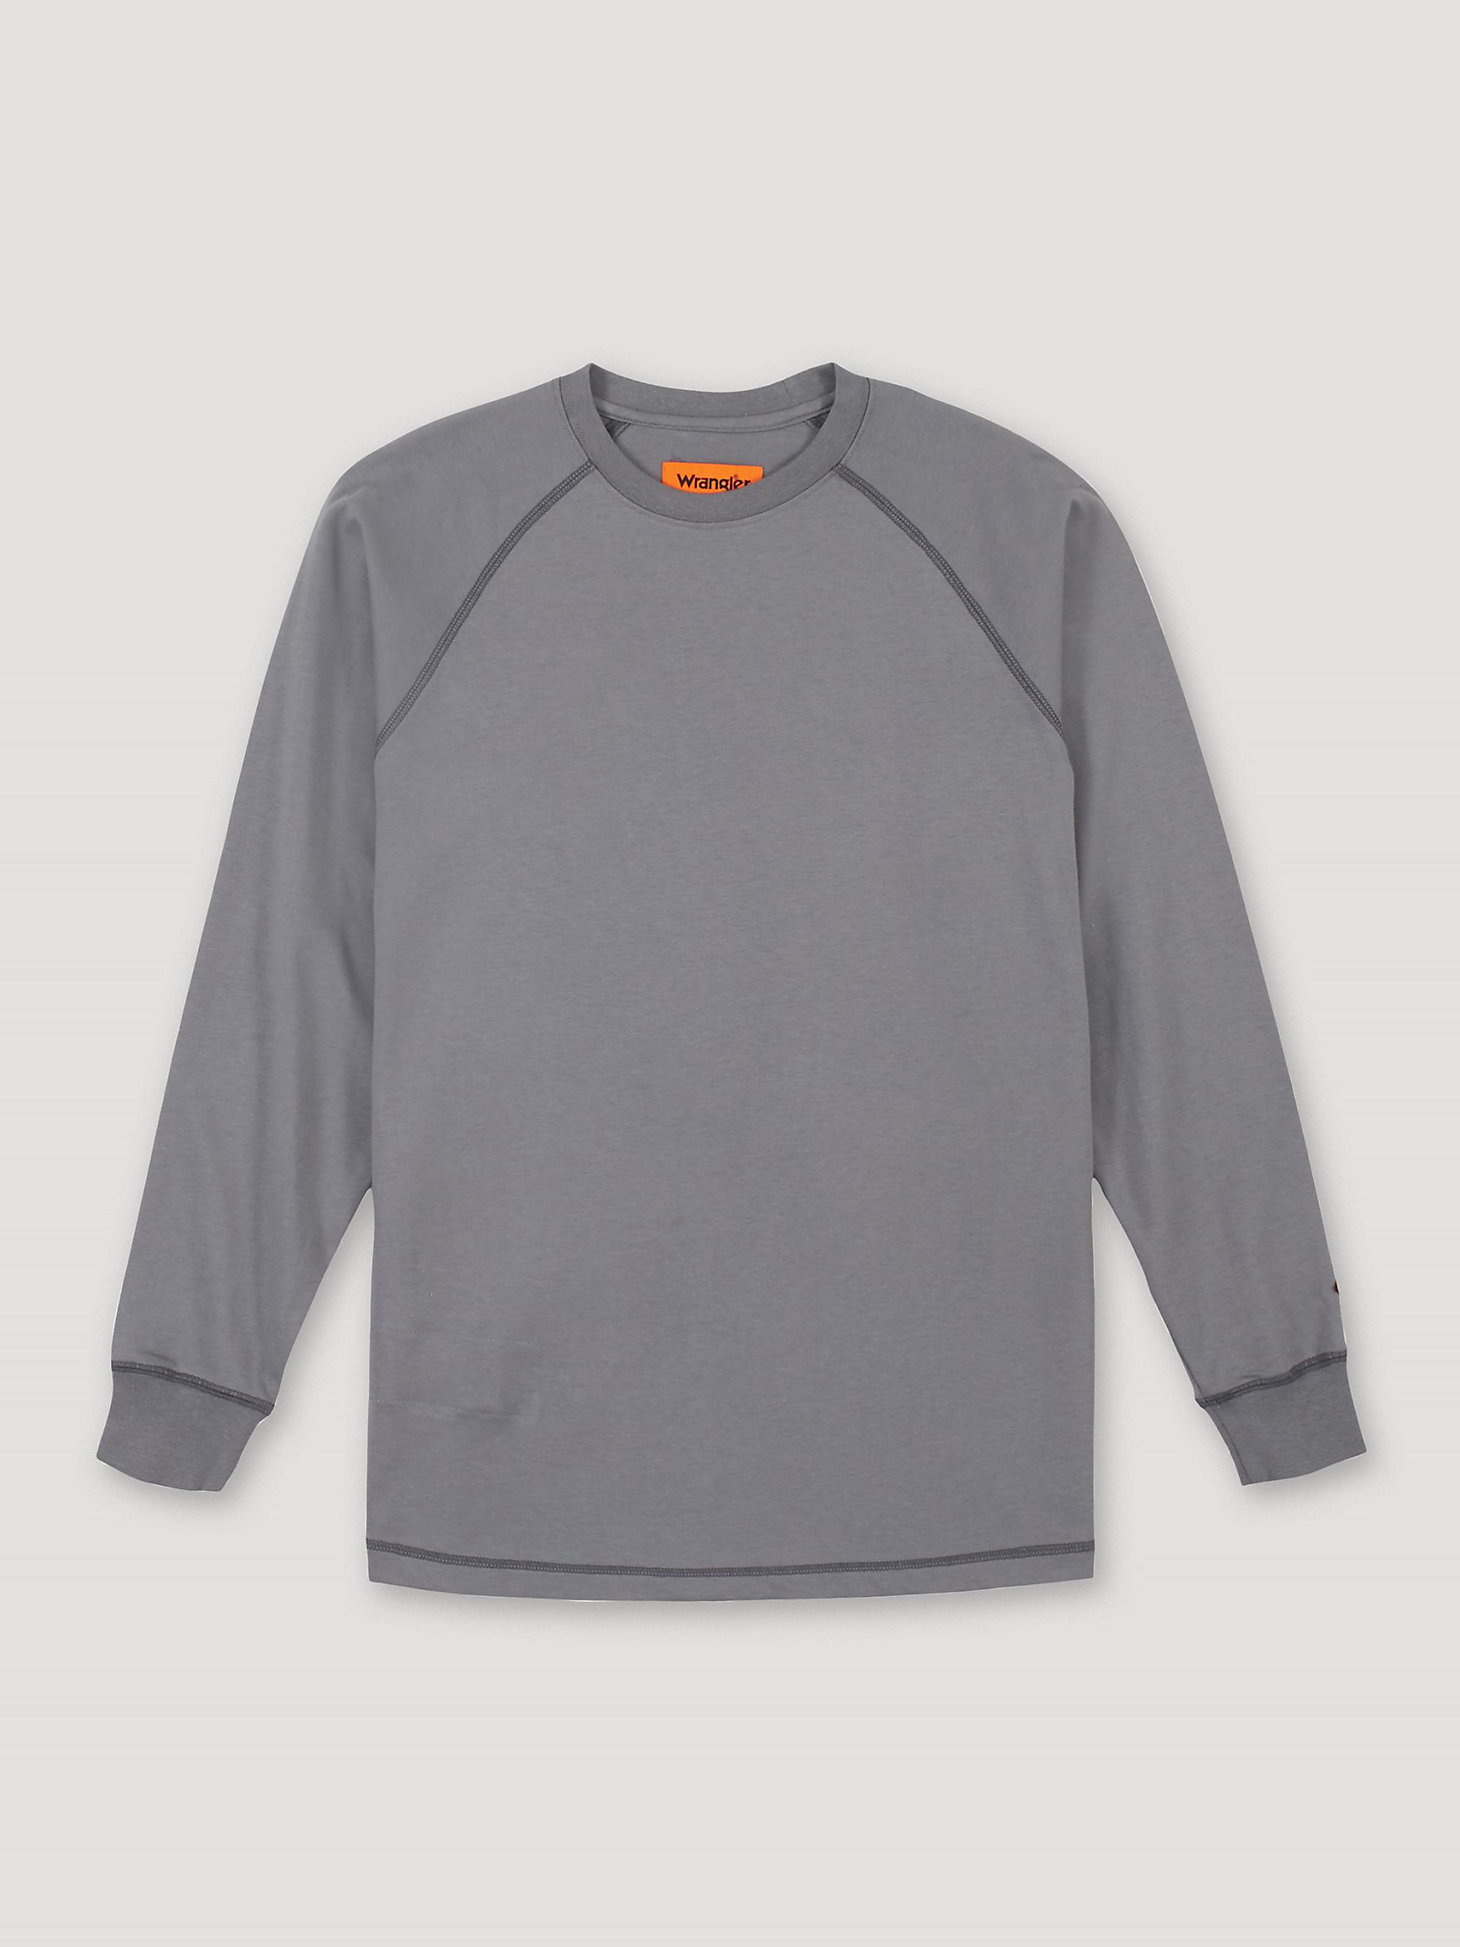 FREE USGI Peckham FR Flame Resistant Base Layer Long Sleeve Shirt Sand S/S NEW 